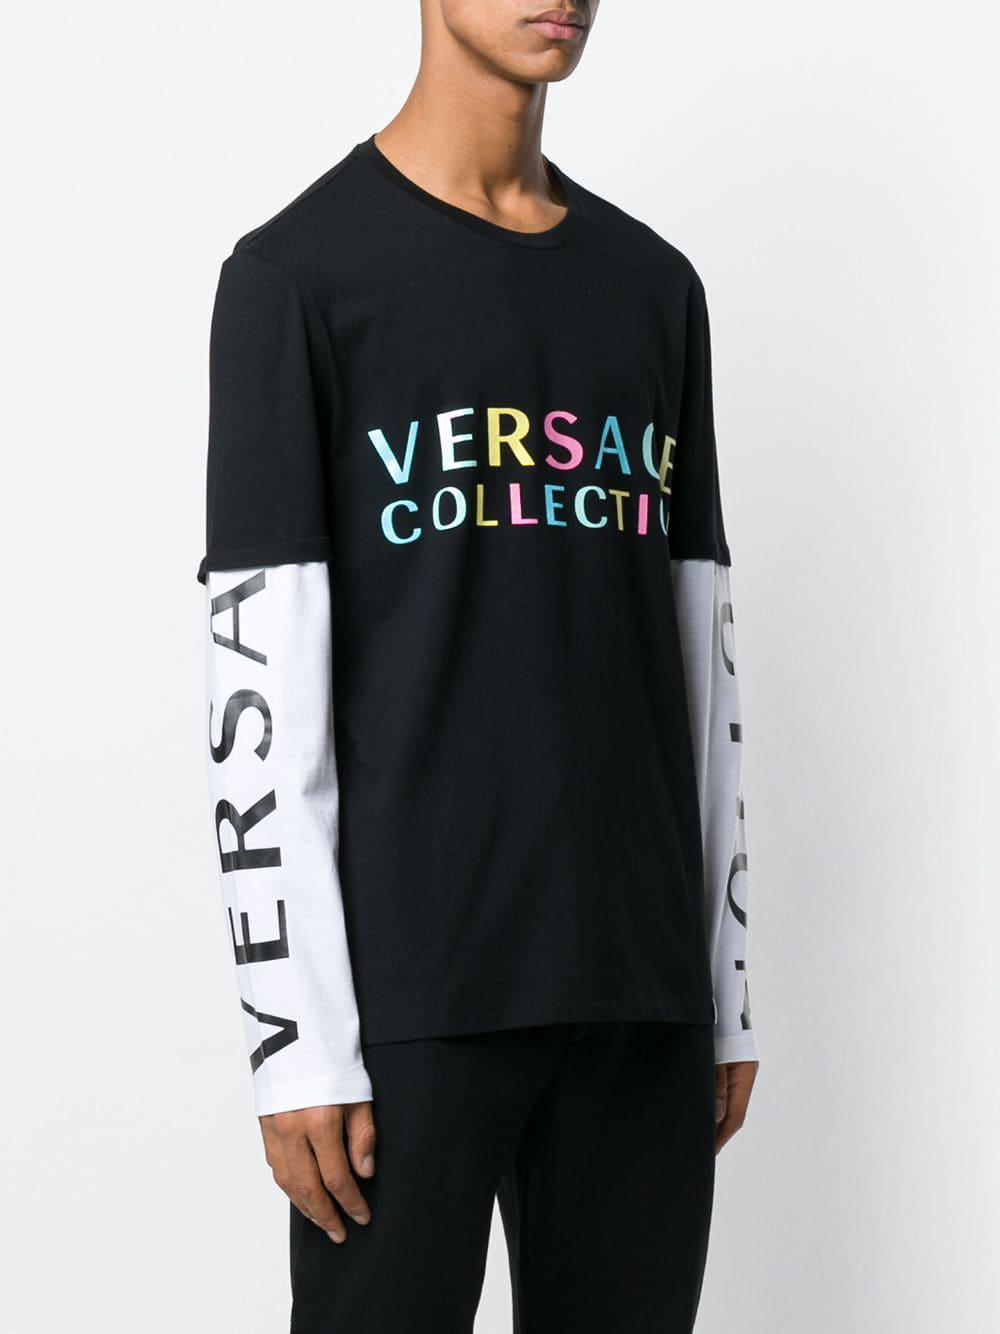 Versace Cotton Girocollo Ml Regolare T-shirt in Black for Men - Lyst